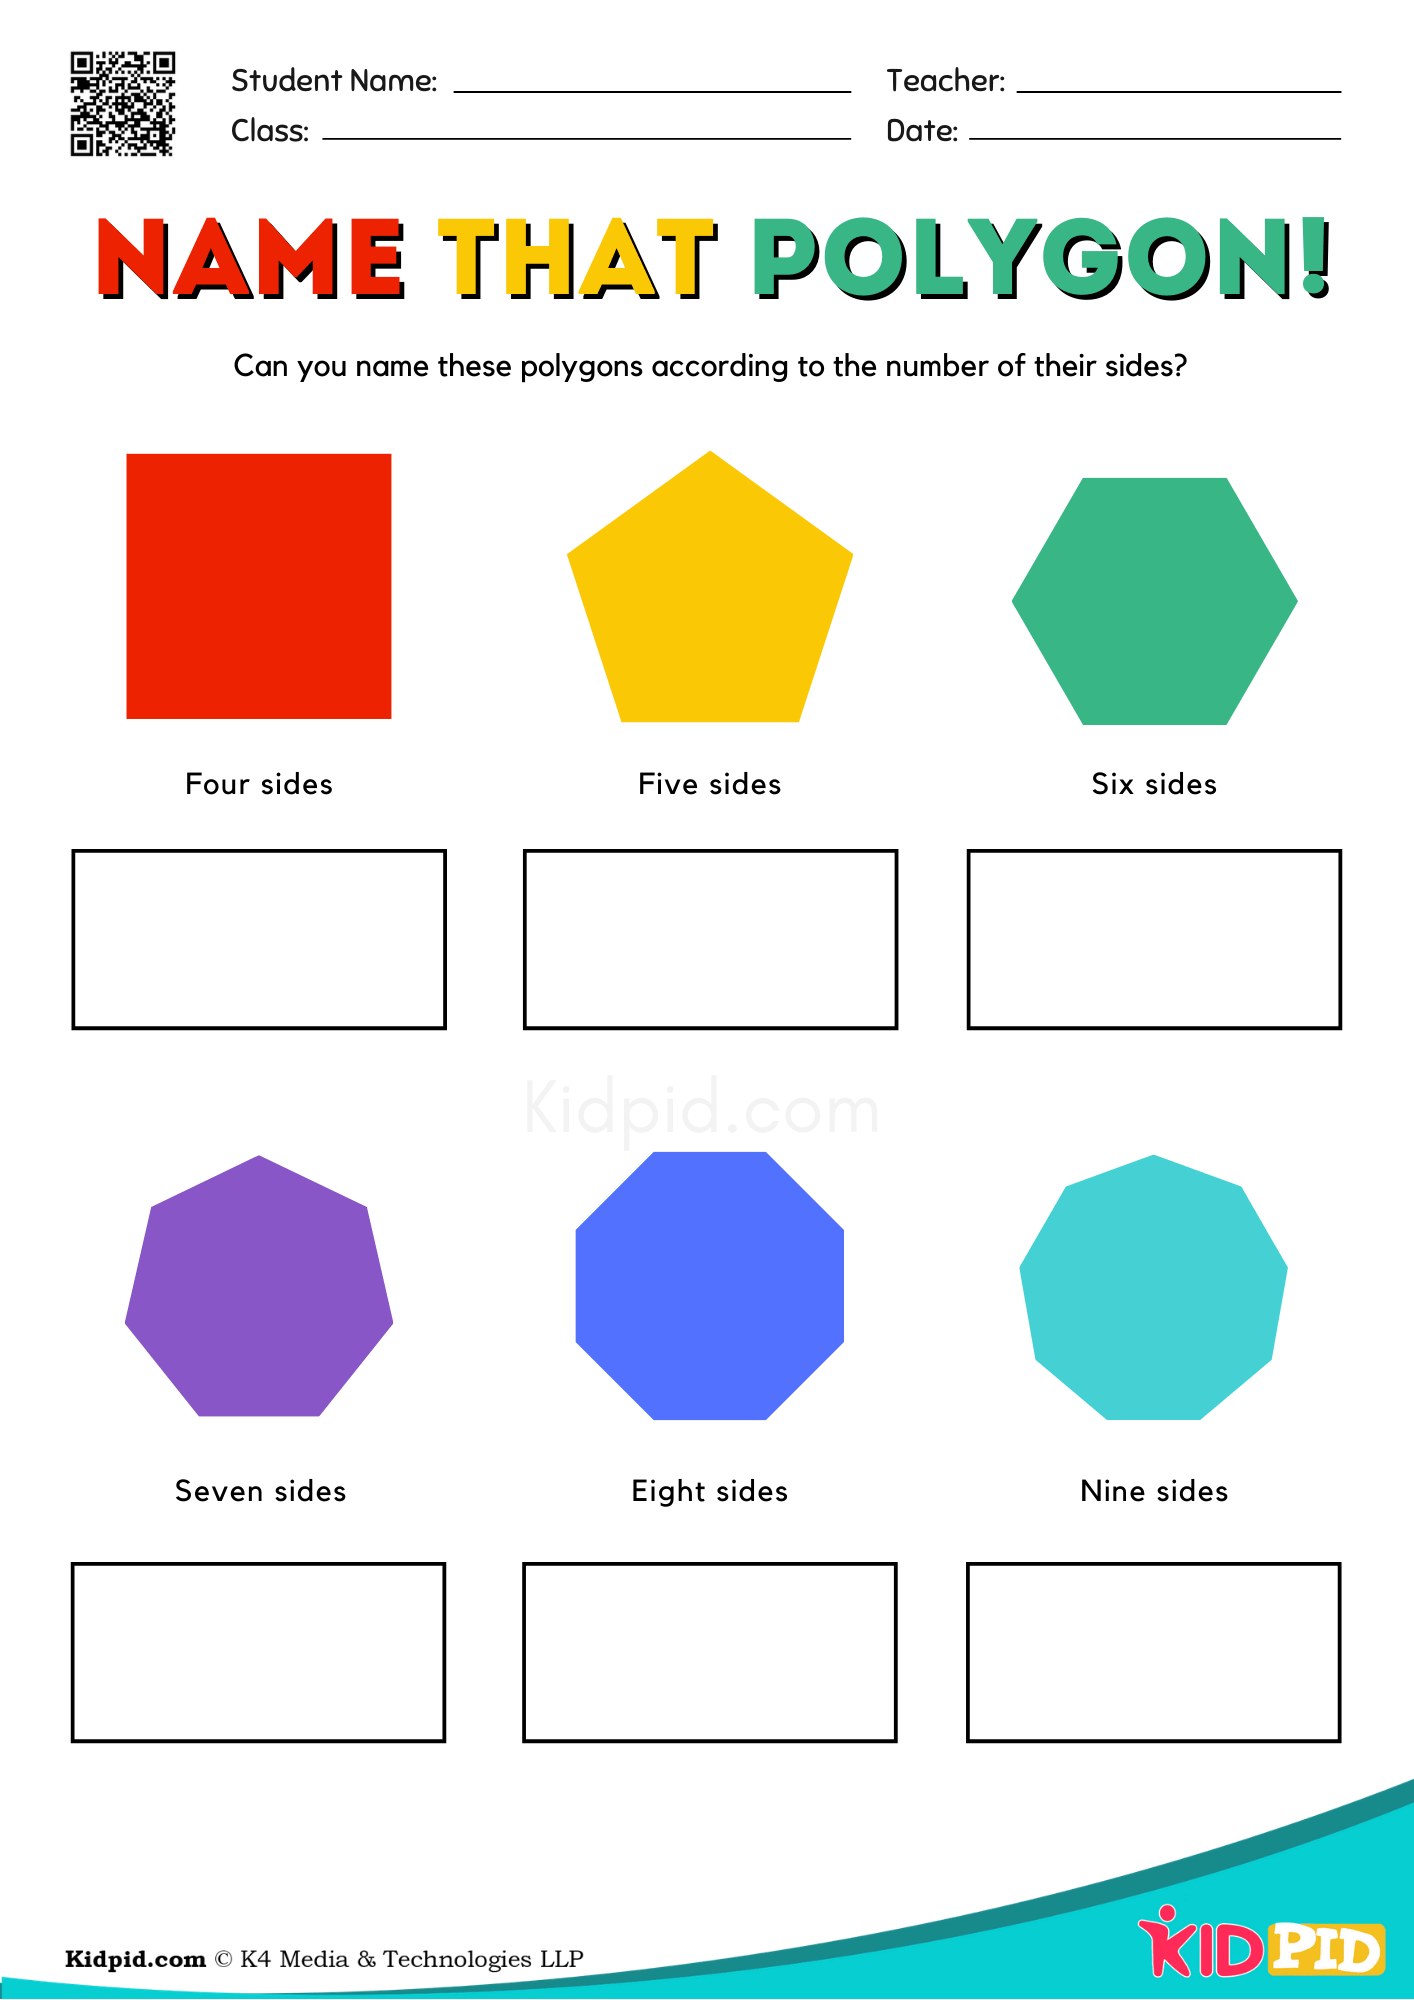 polygons-worksheets